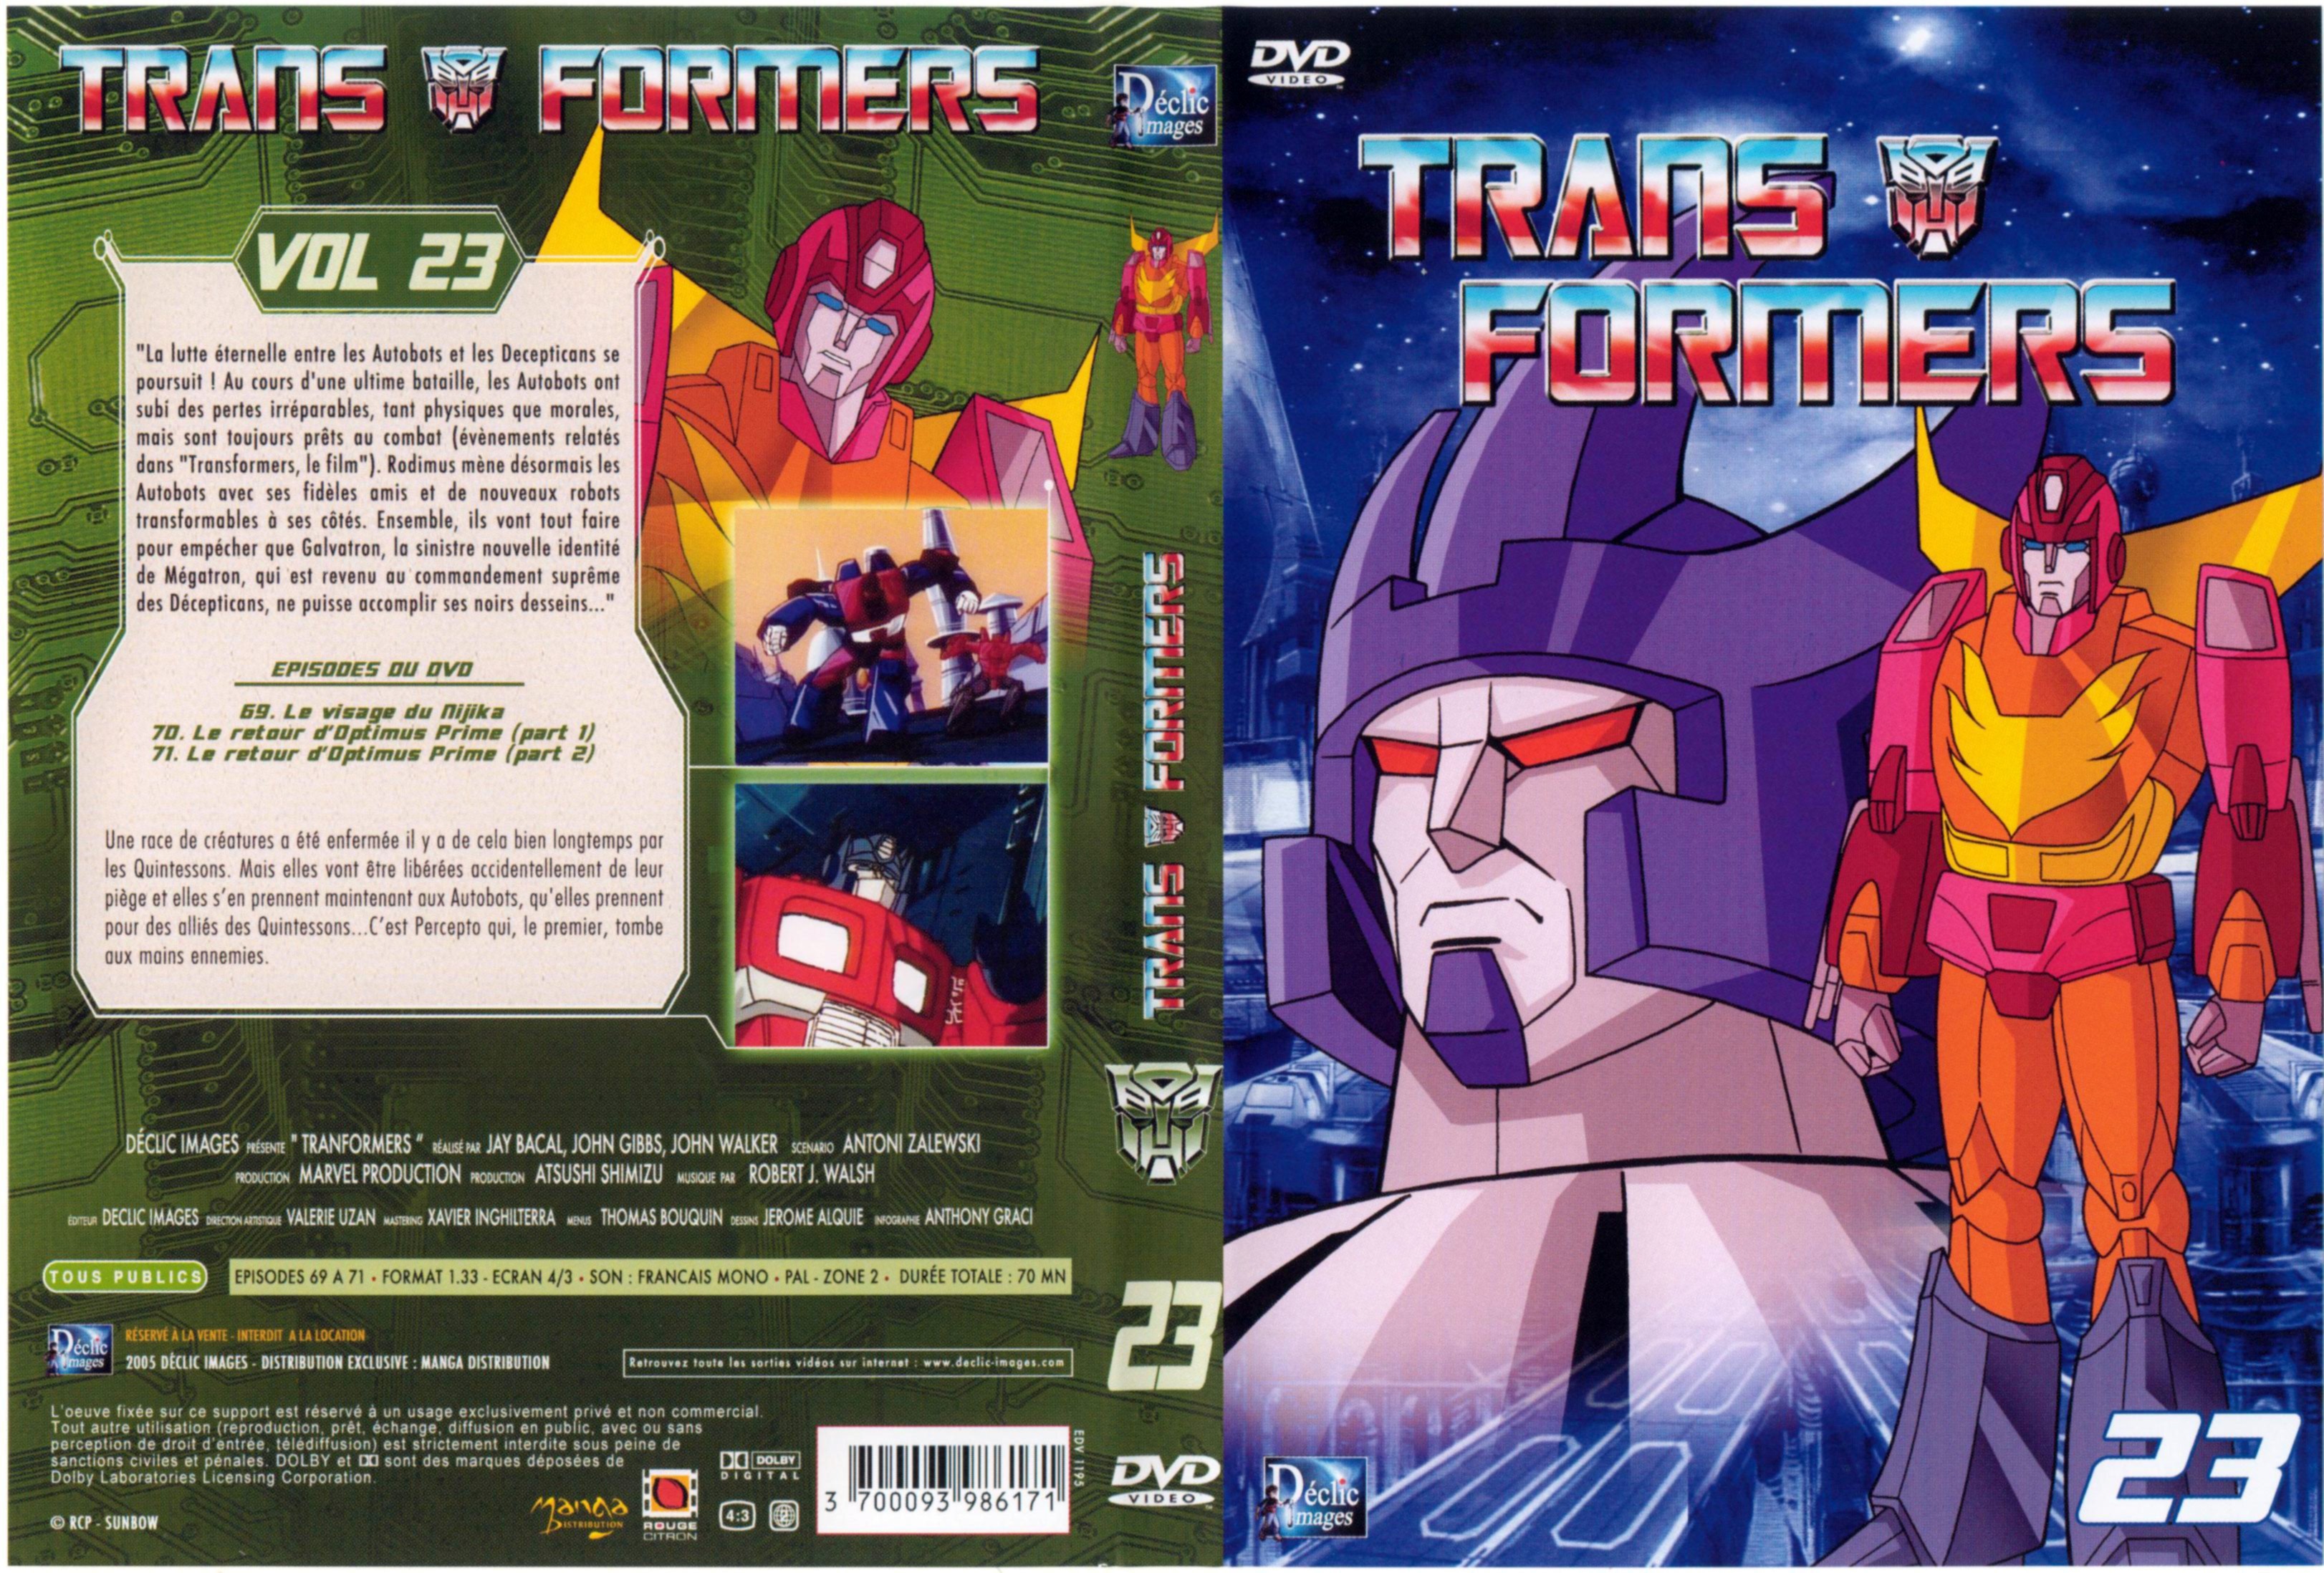 Jaquette DVD Transformers vol 23